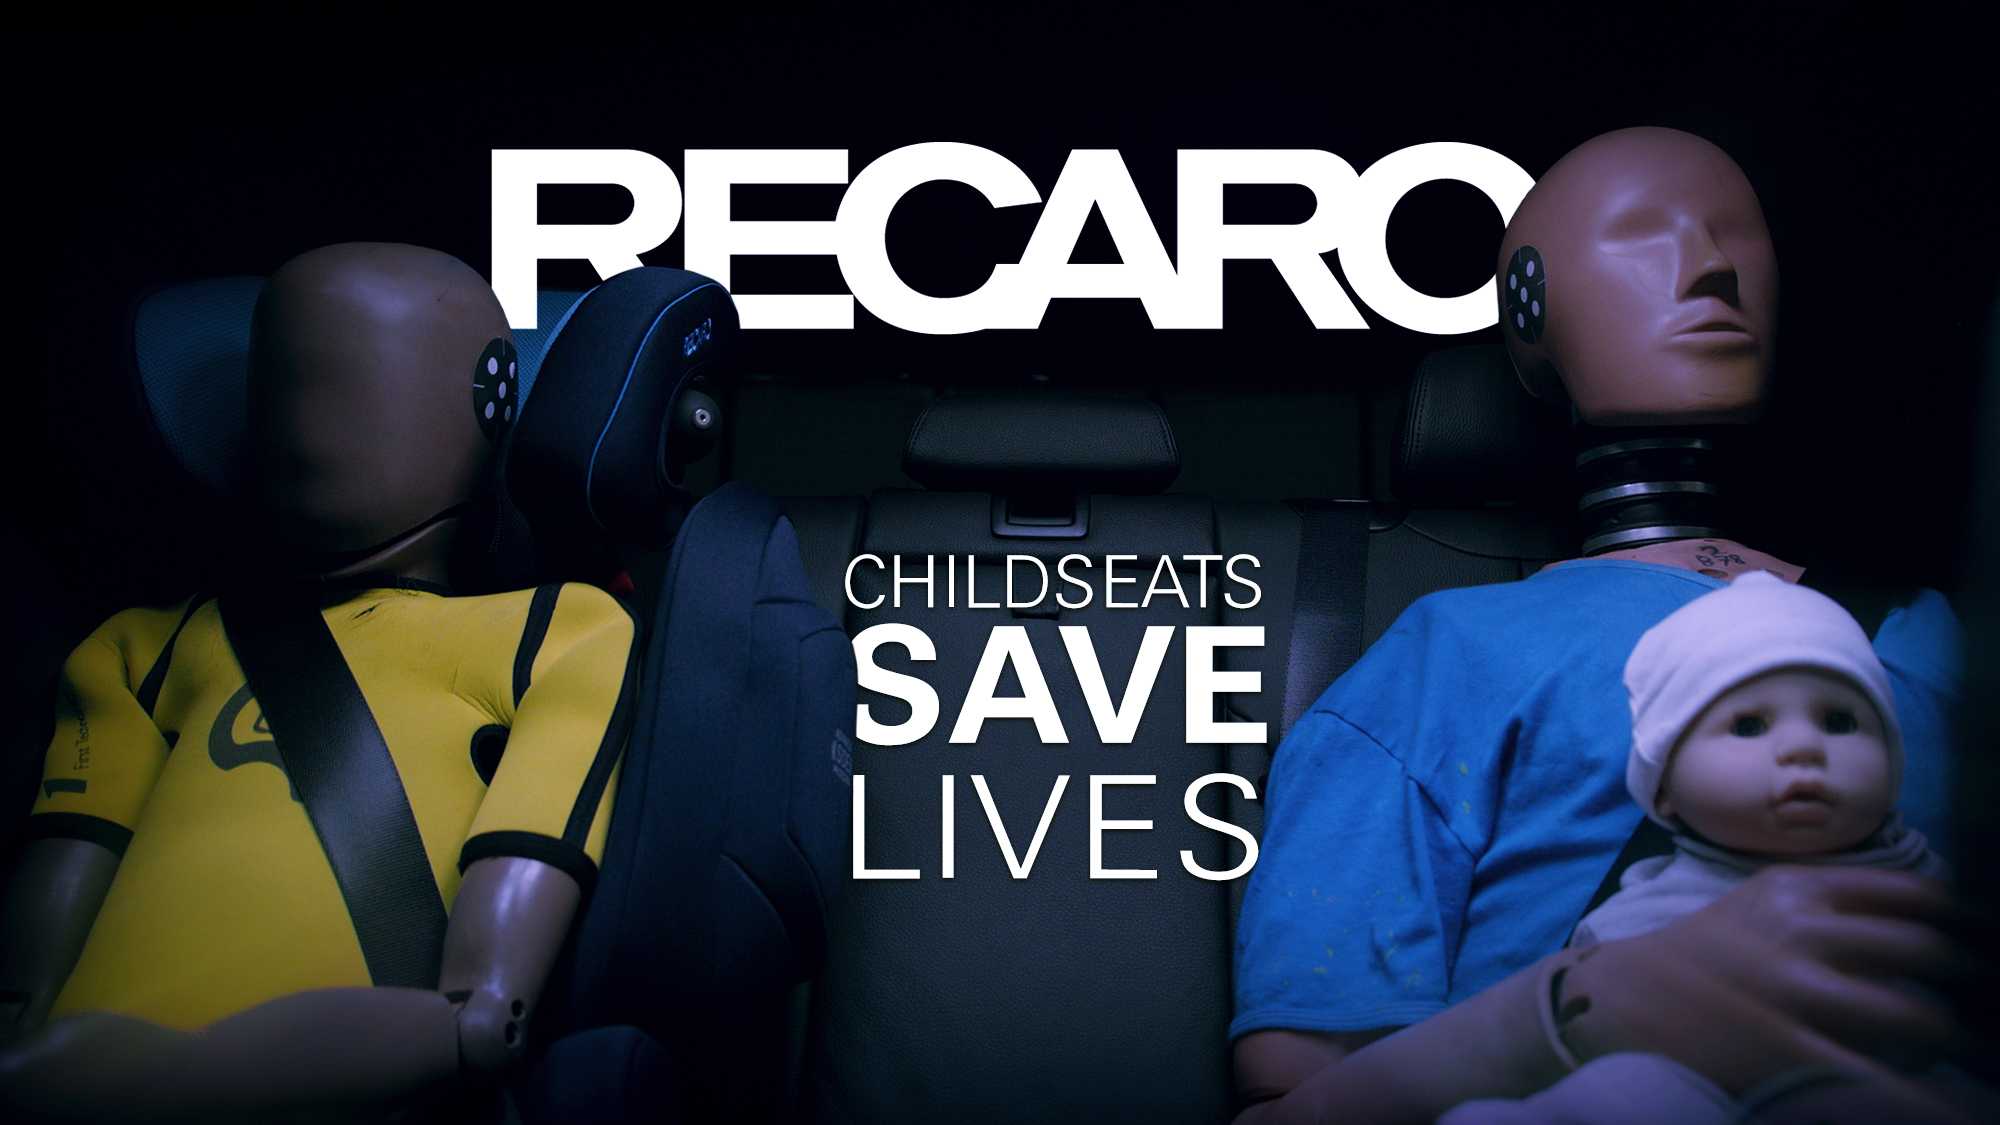 RECARO Child Safety – Childseats Save Lives